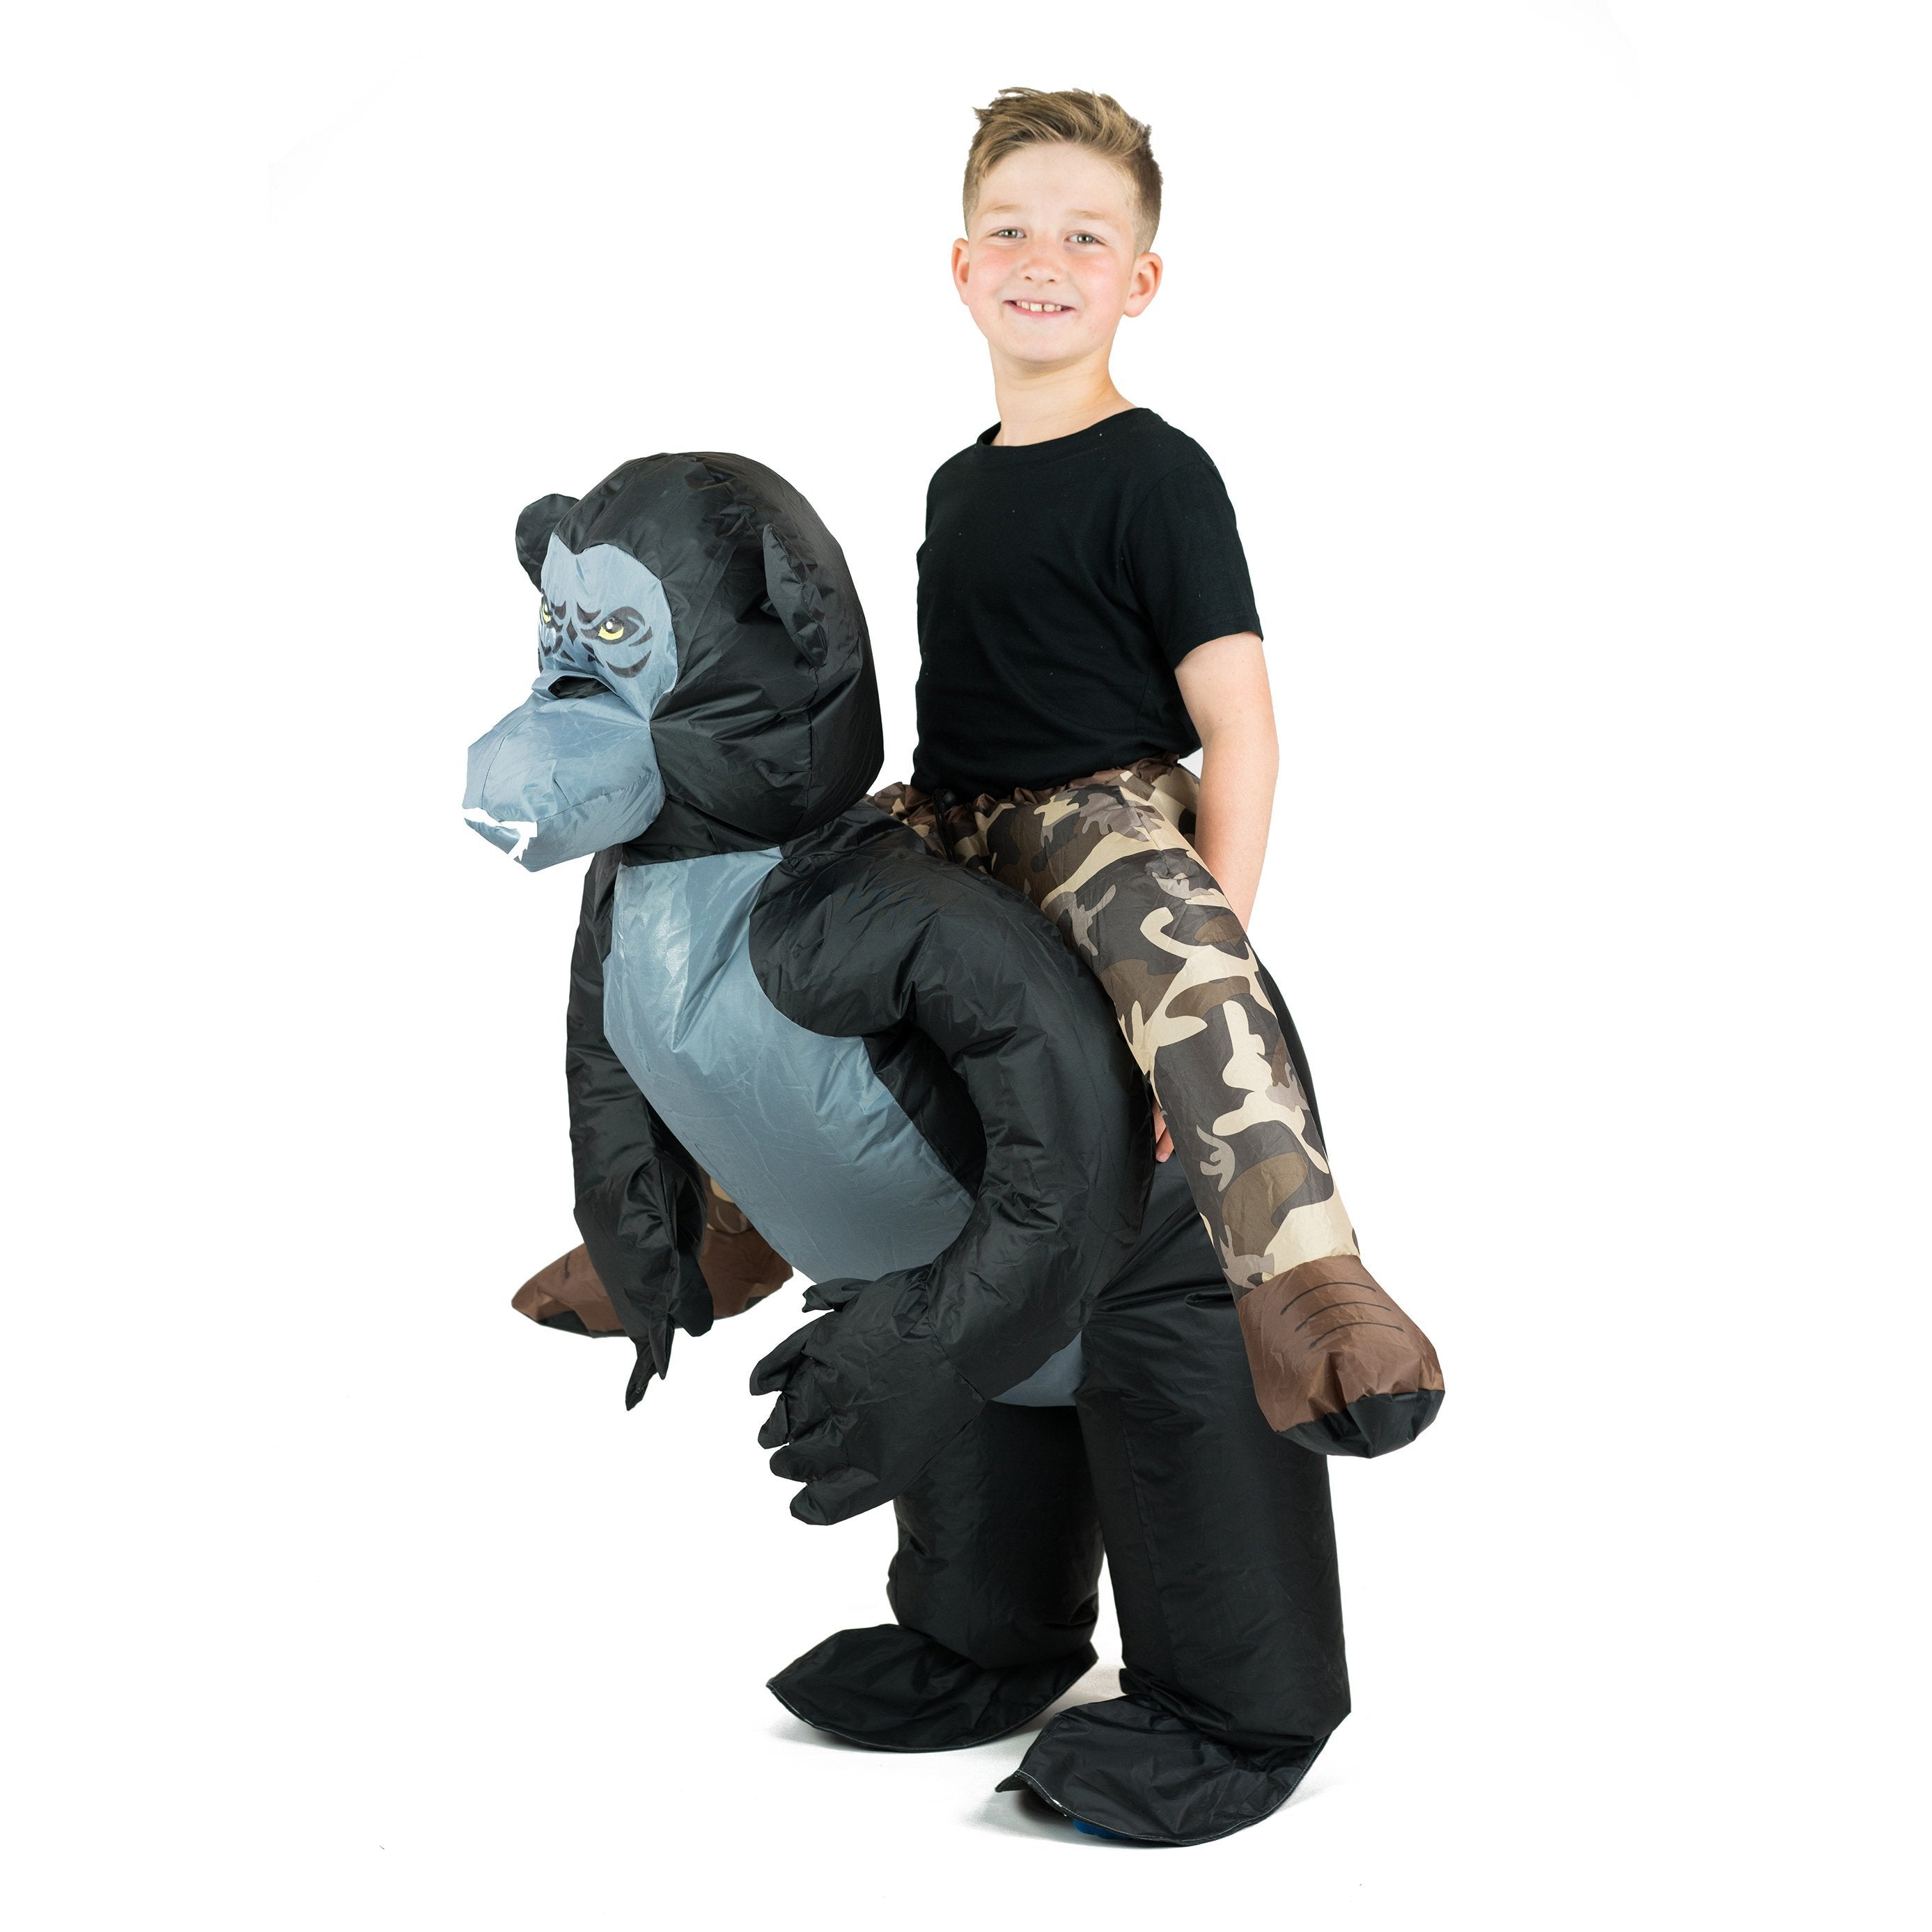 Bodysocks - Kids Inflatable Gorilla Costume